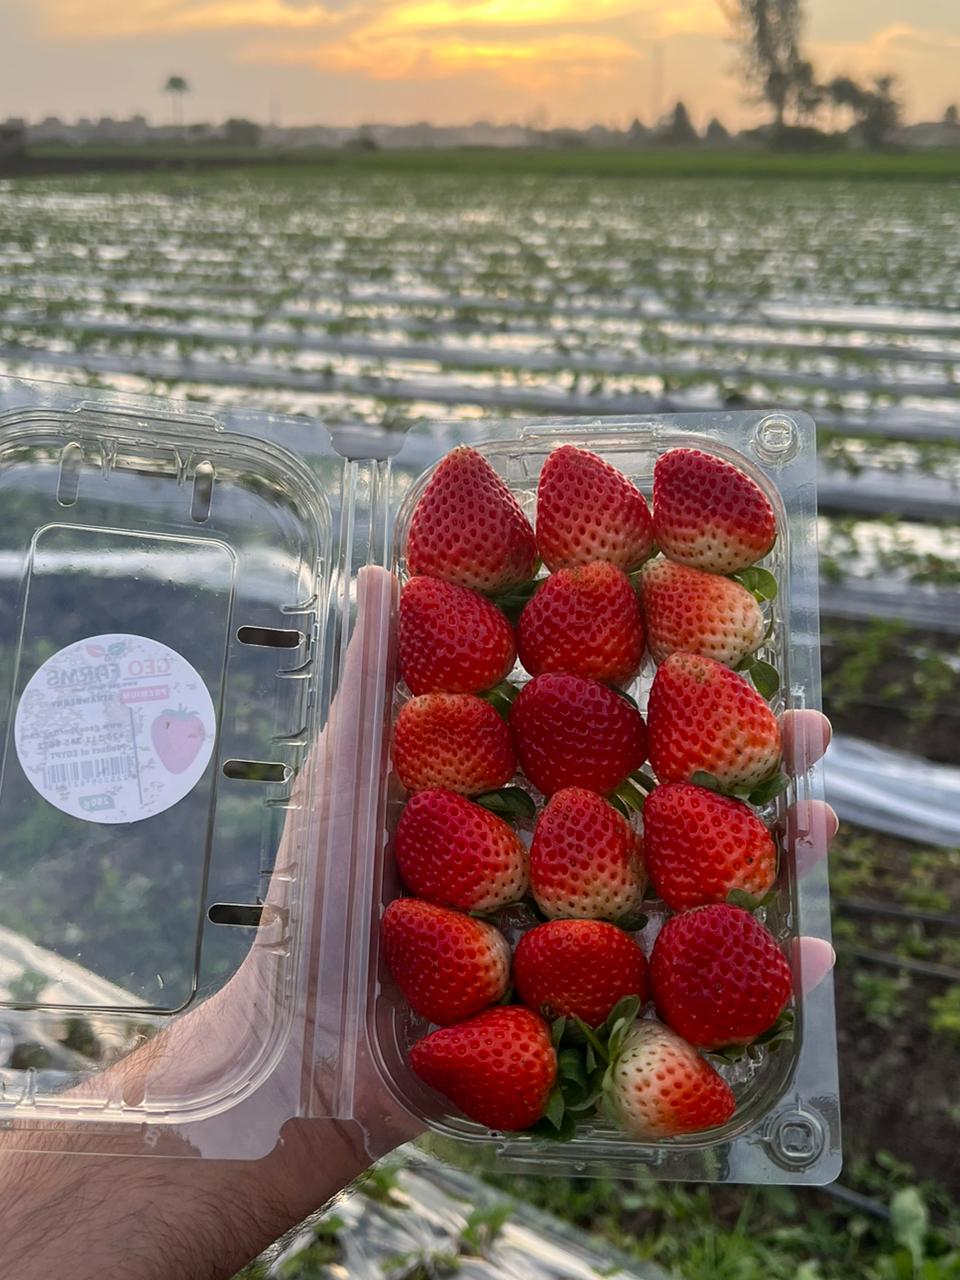 Egyptian Fresh Strawberry Fortuna GEO Farms